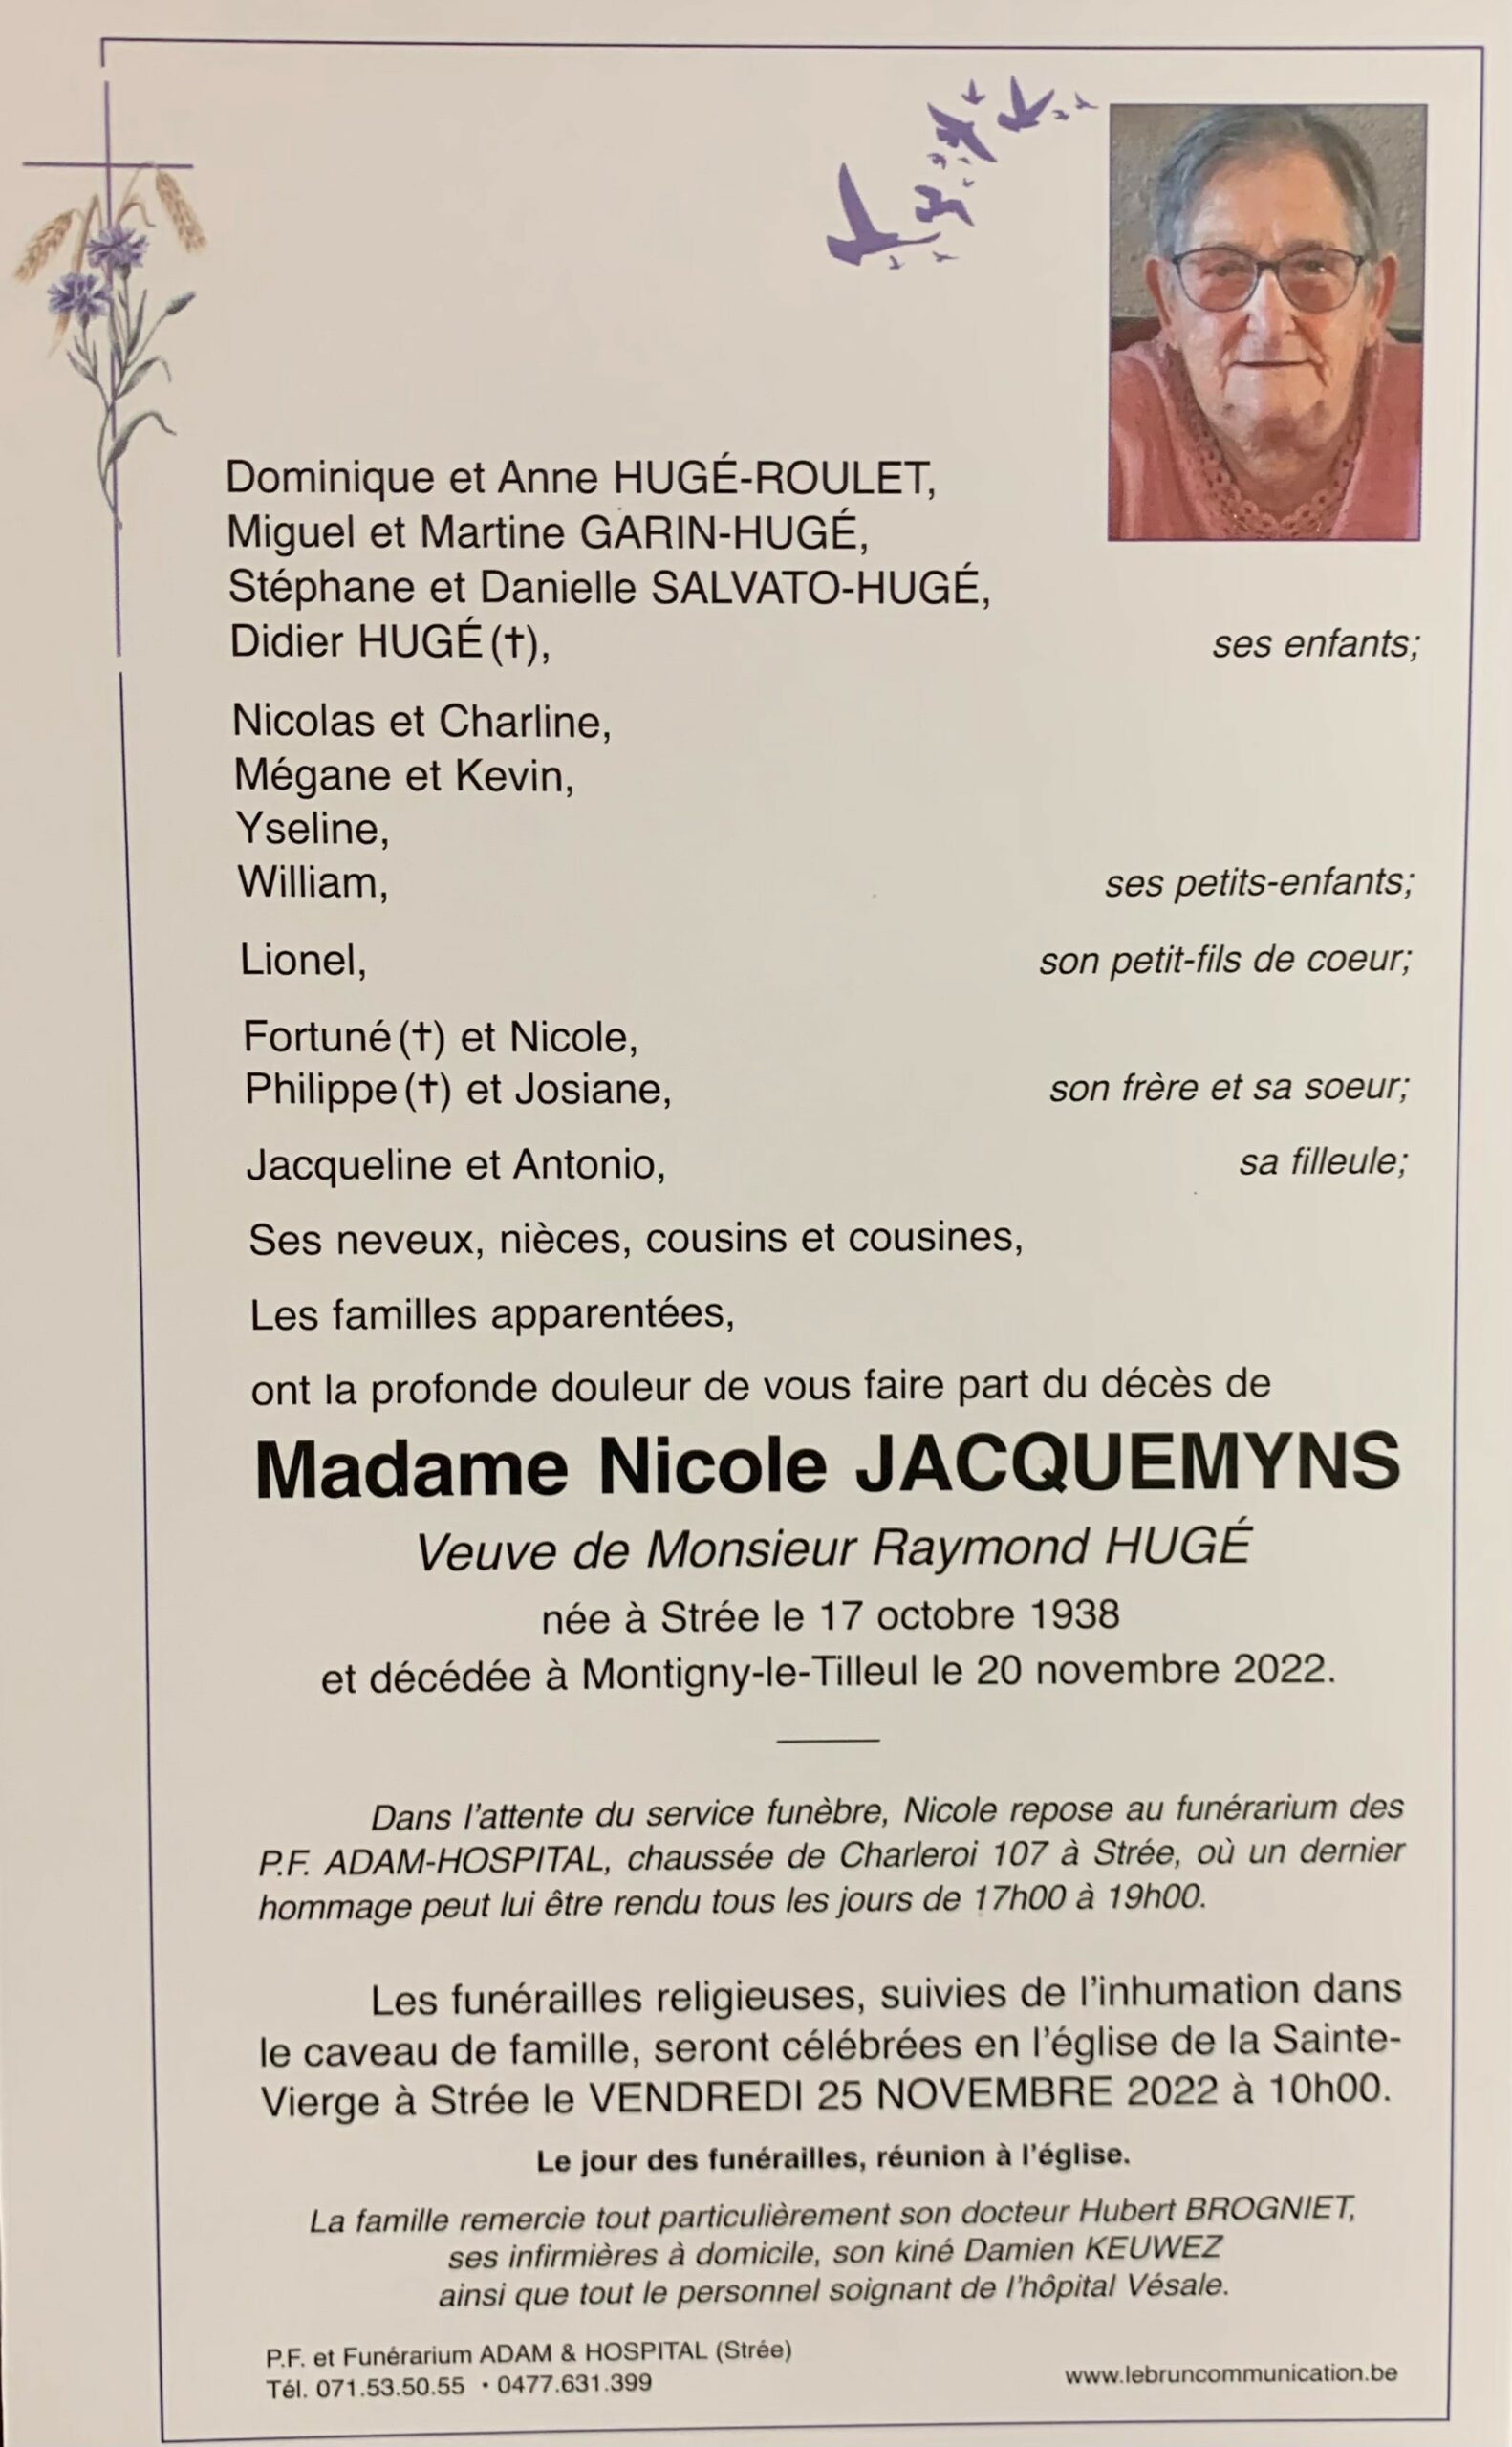 Madame Nicole JACQUEMYNS scaled | Funérailles Adam Hospital